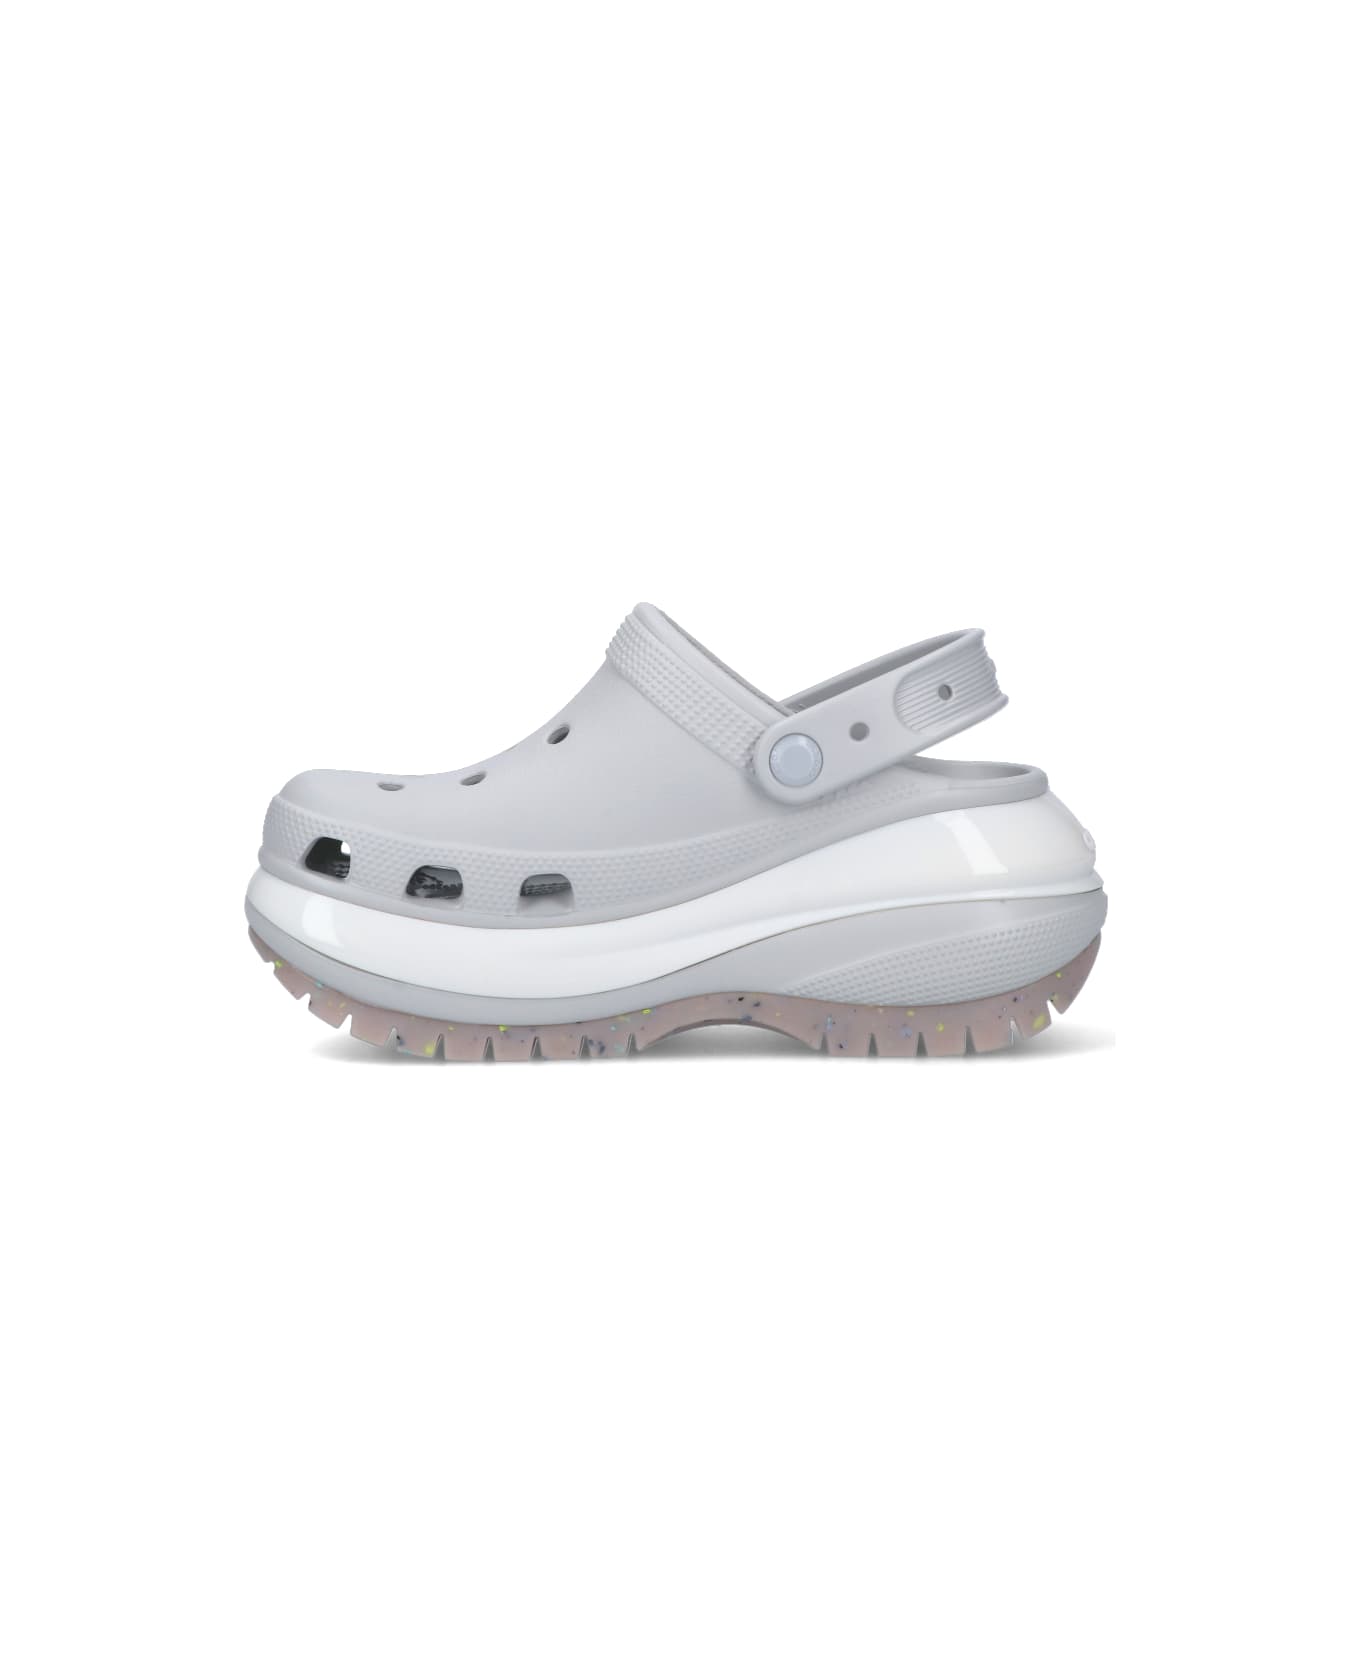 Crocs Flat Shoes - Grey